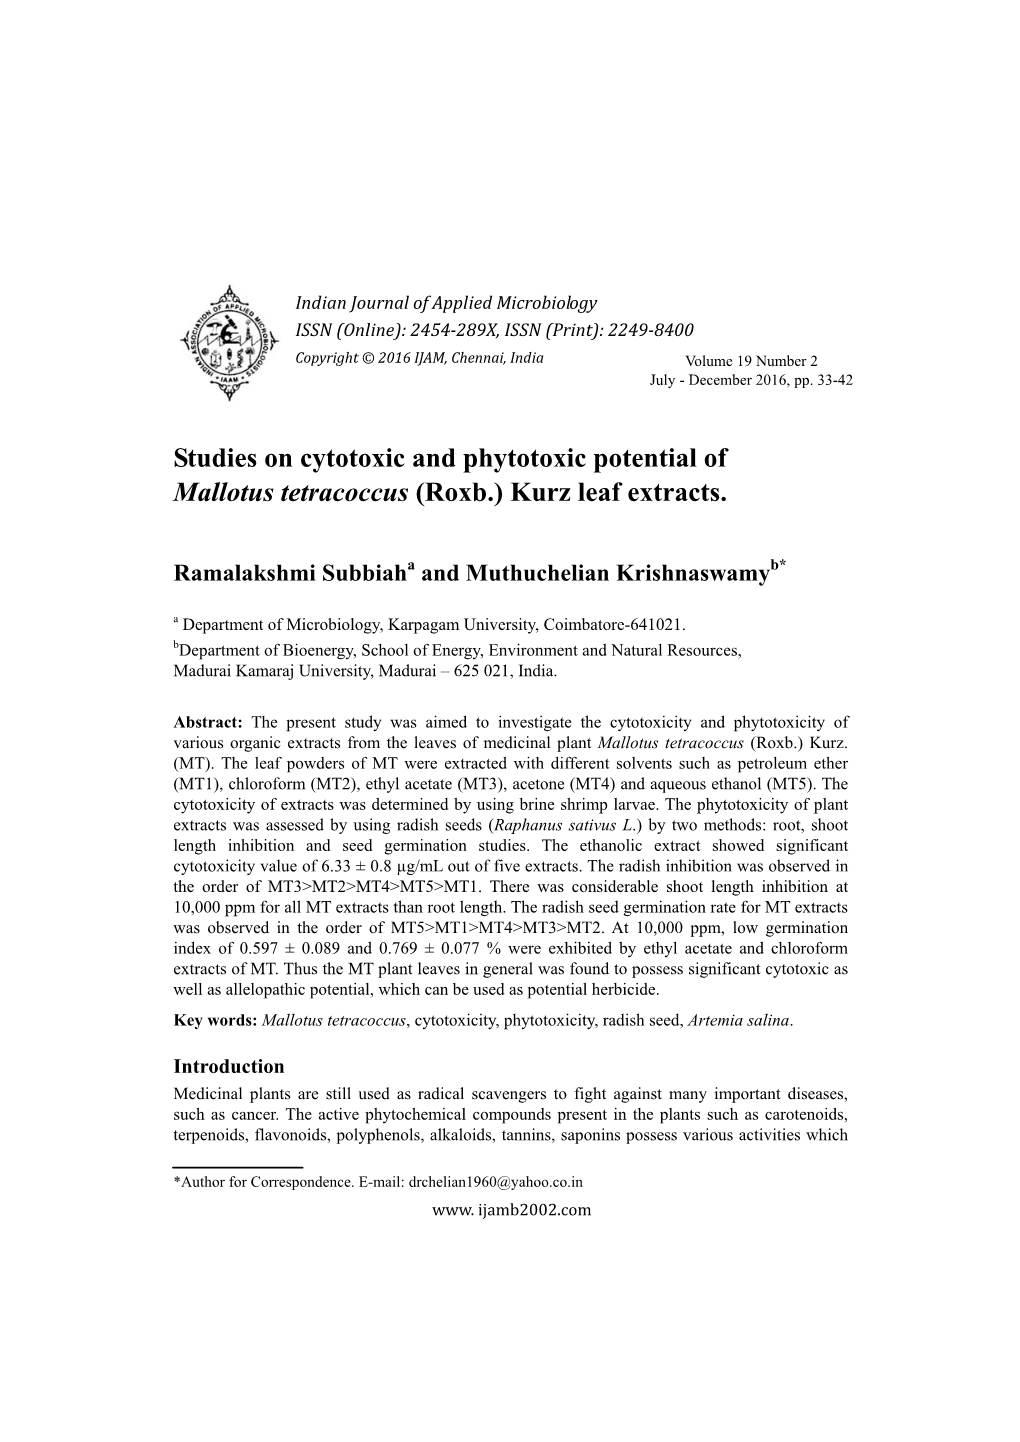 Studies on Cytotoxic and Phytotoxic Potential of Mallotus Tetracoccus (Roxb.) Kurz Leaf Extracts